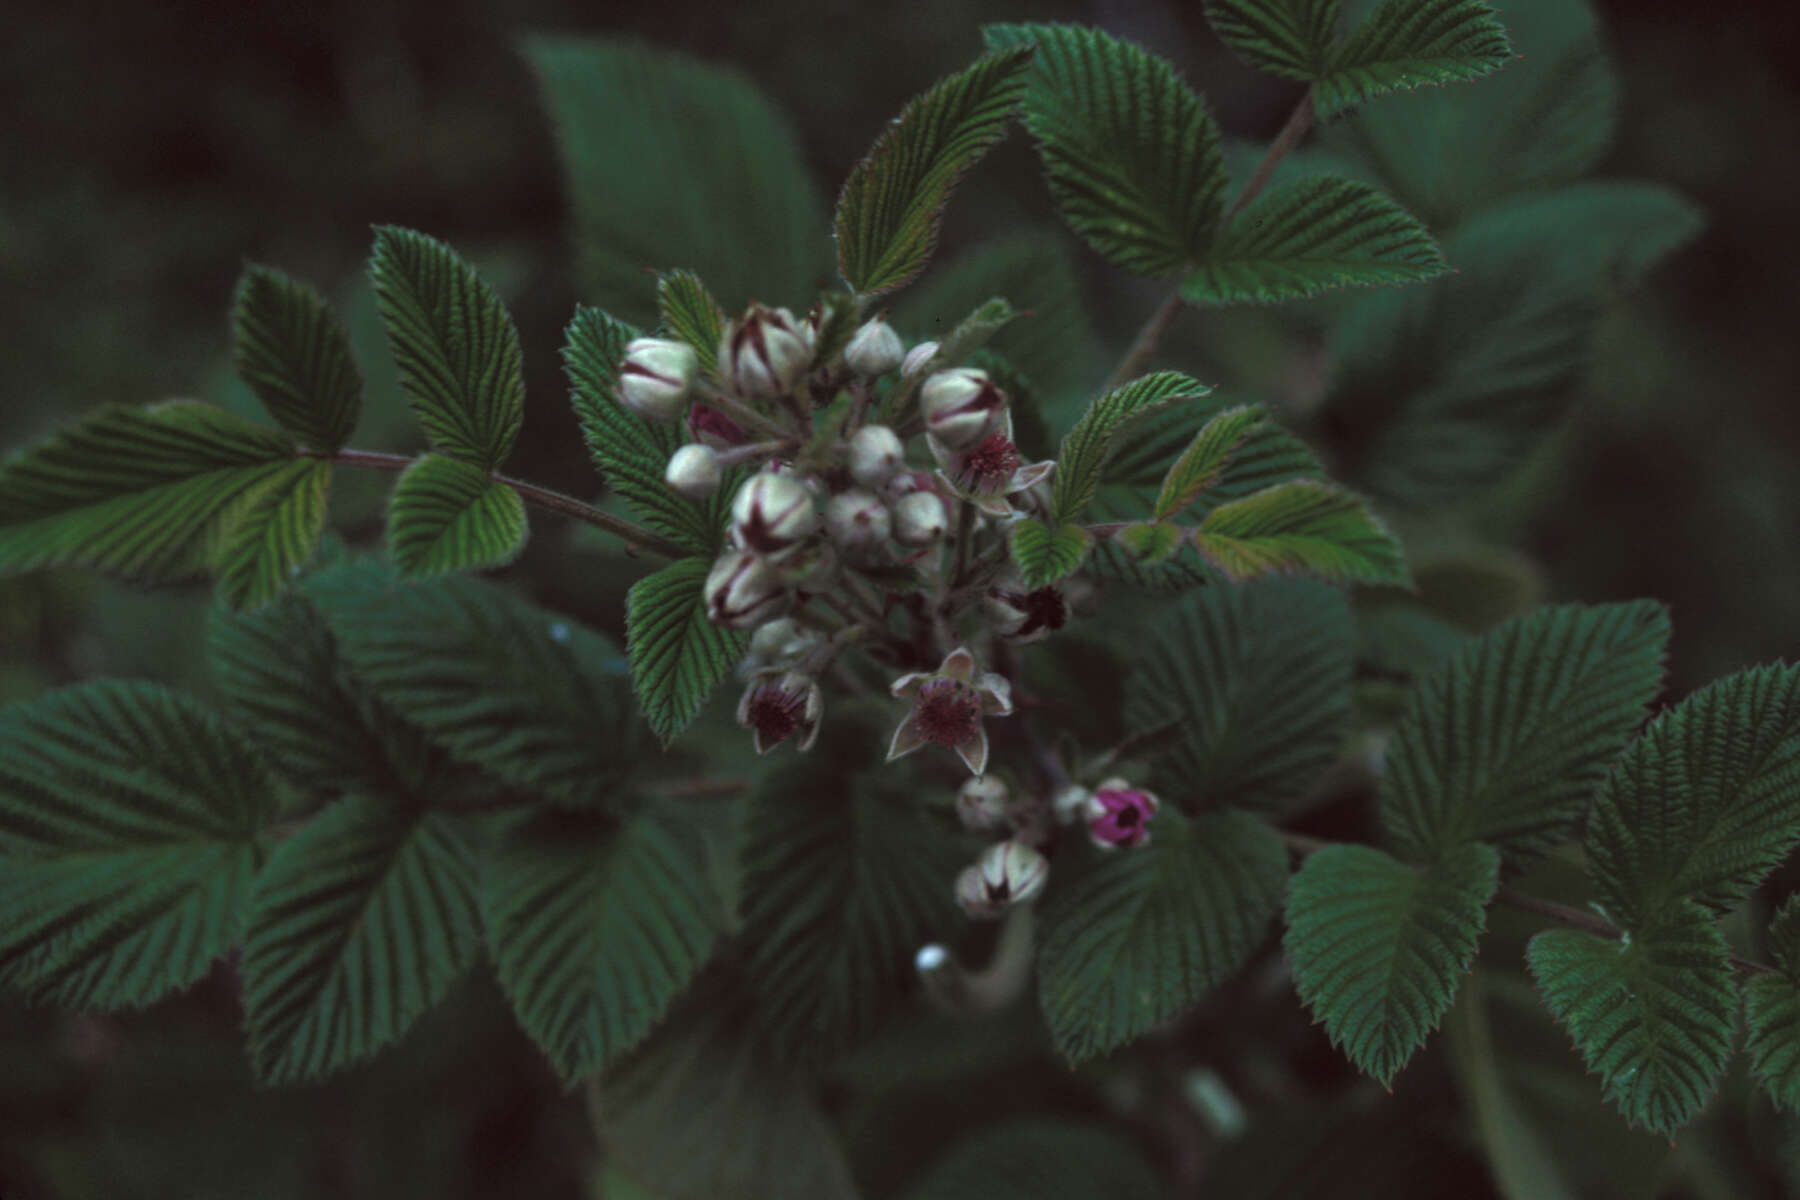 Image de Rubus niveus Thunb.